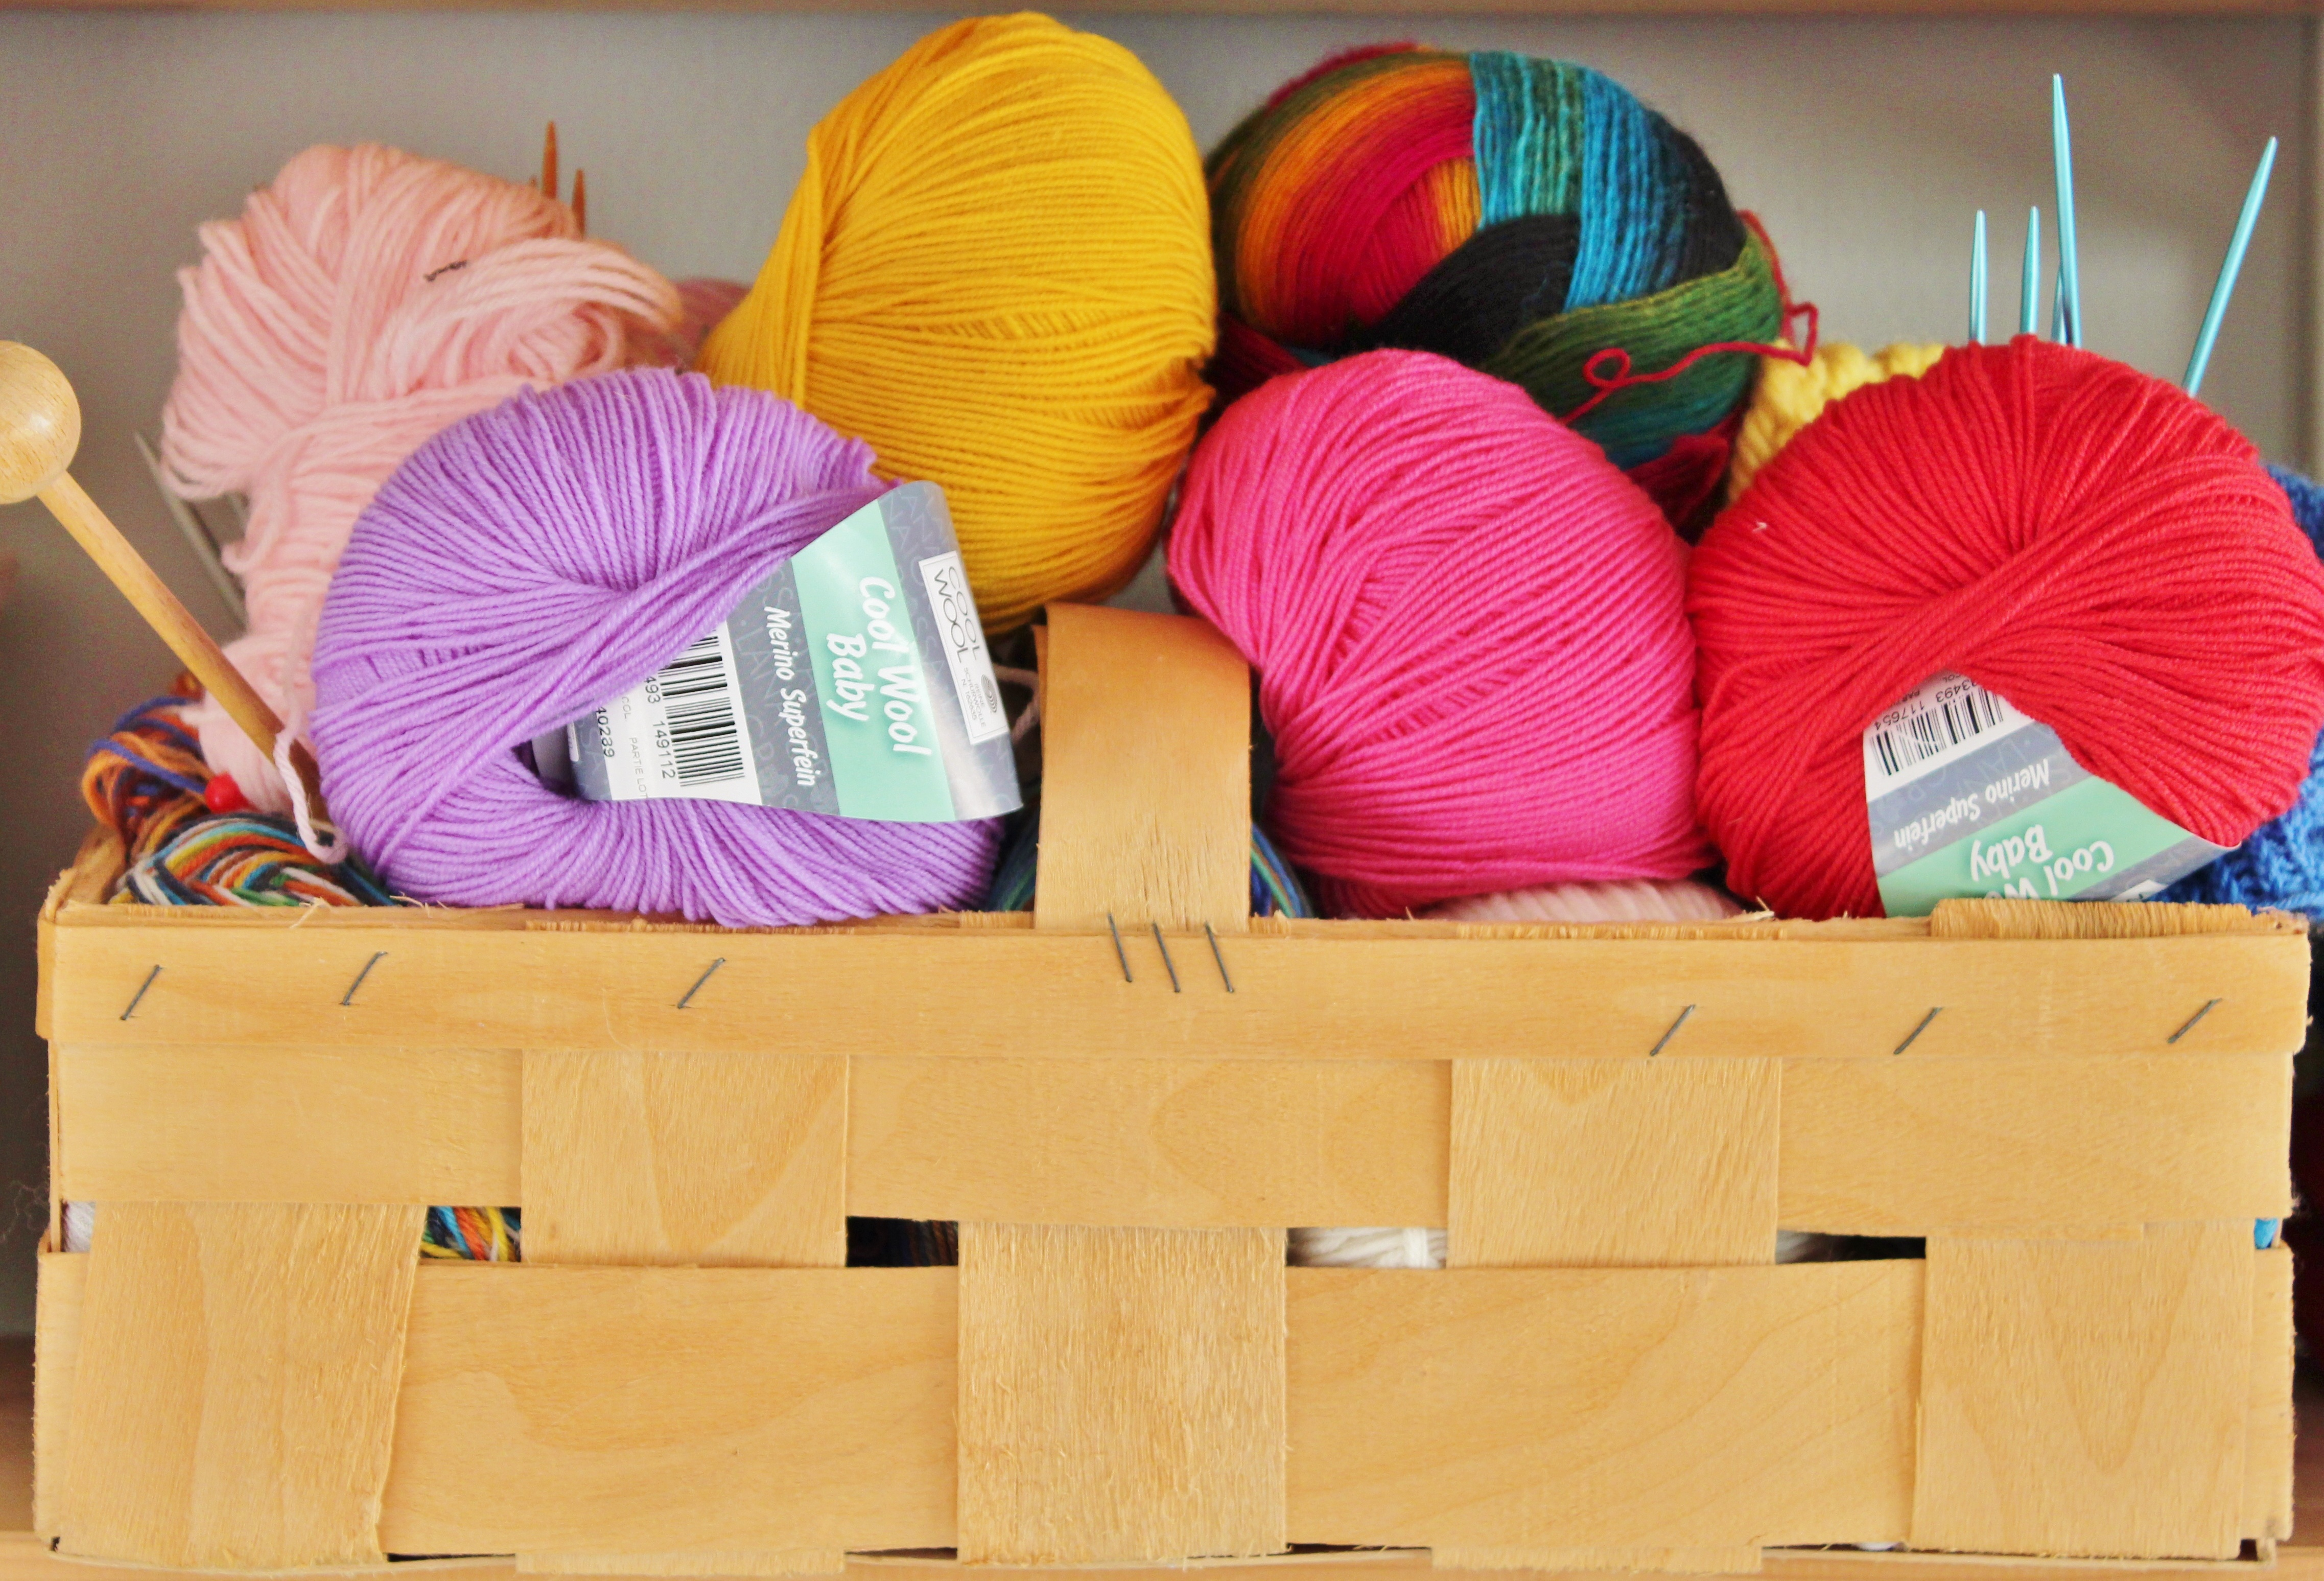 Basket of yarn balls and knitting needles